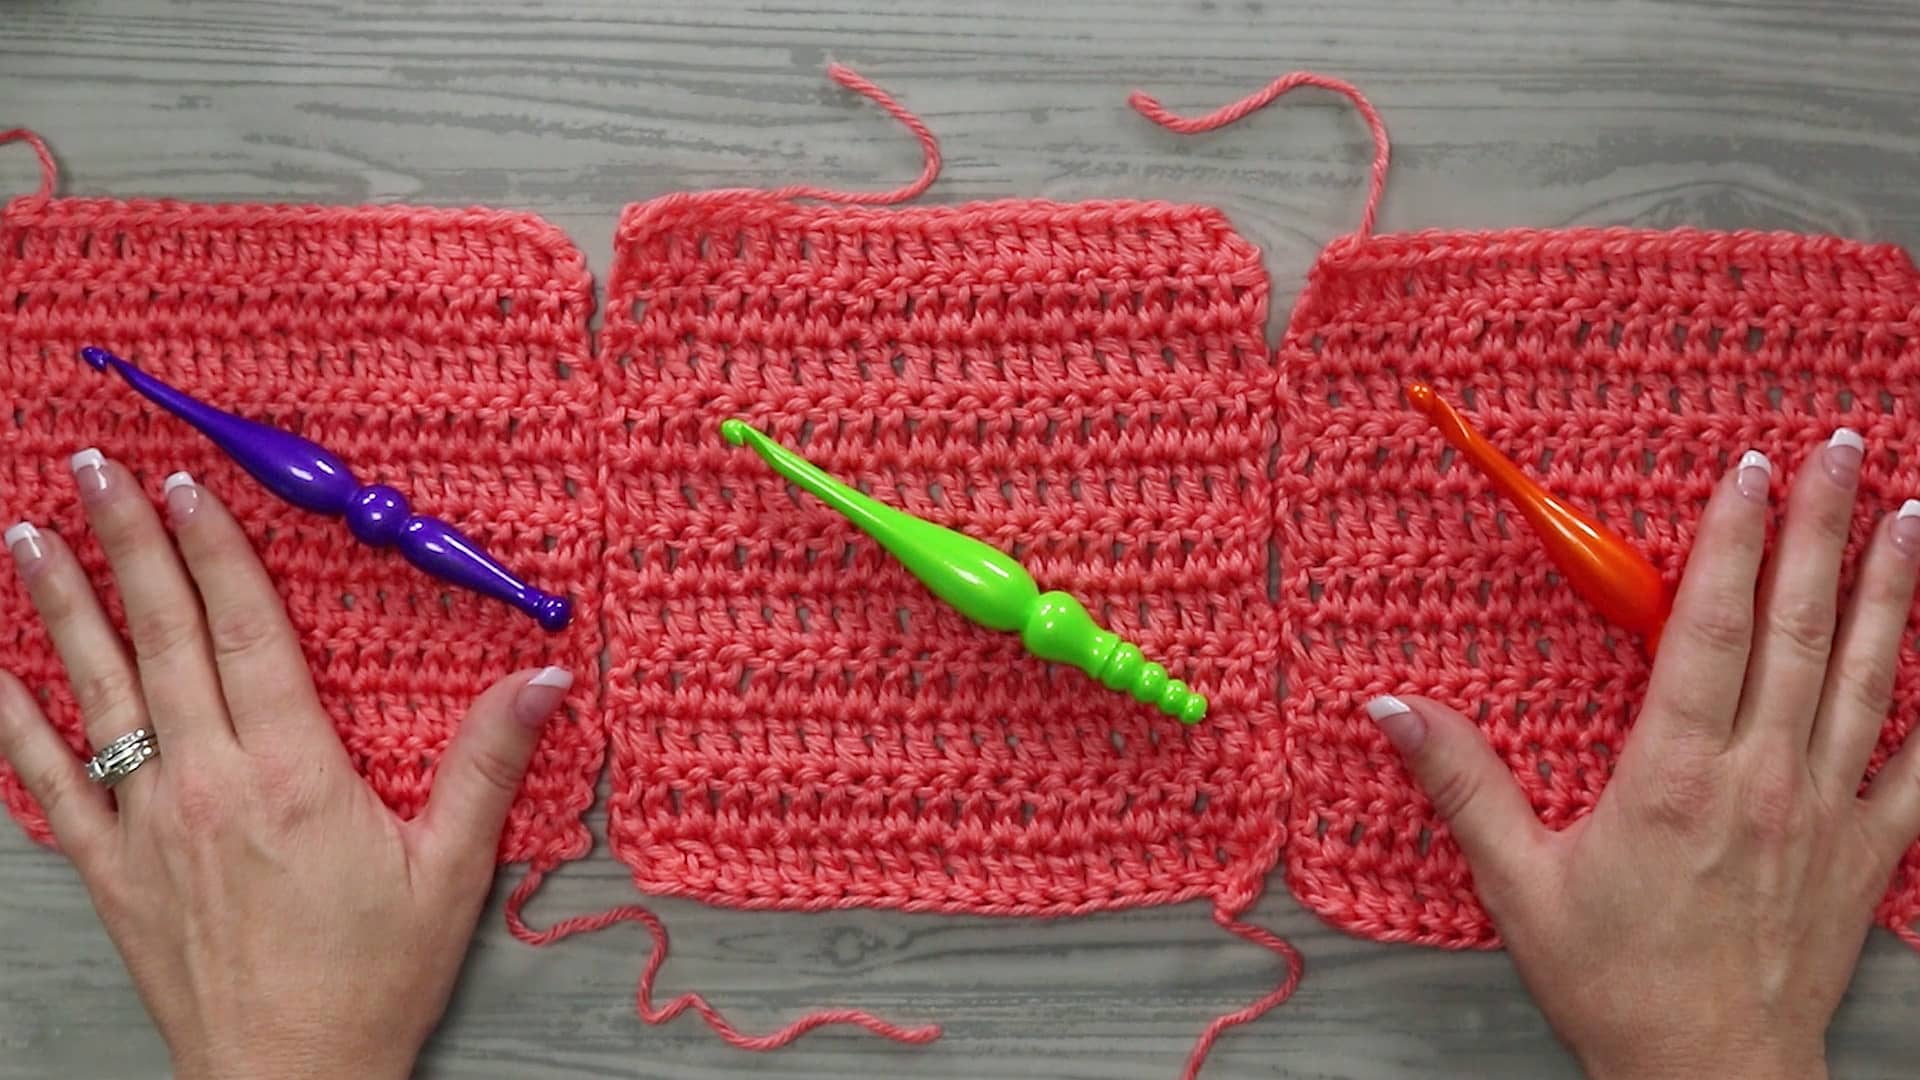 The Crochet Hook - A Wonderful Thing!